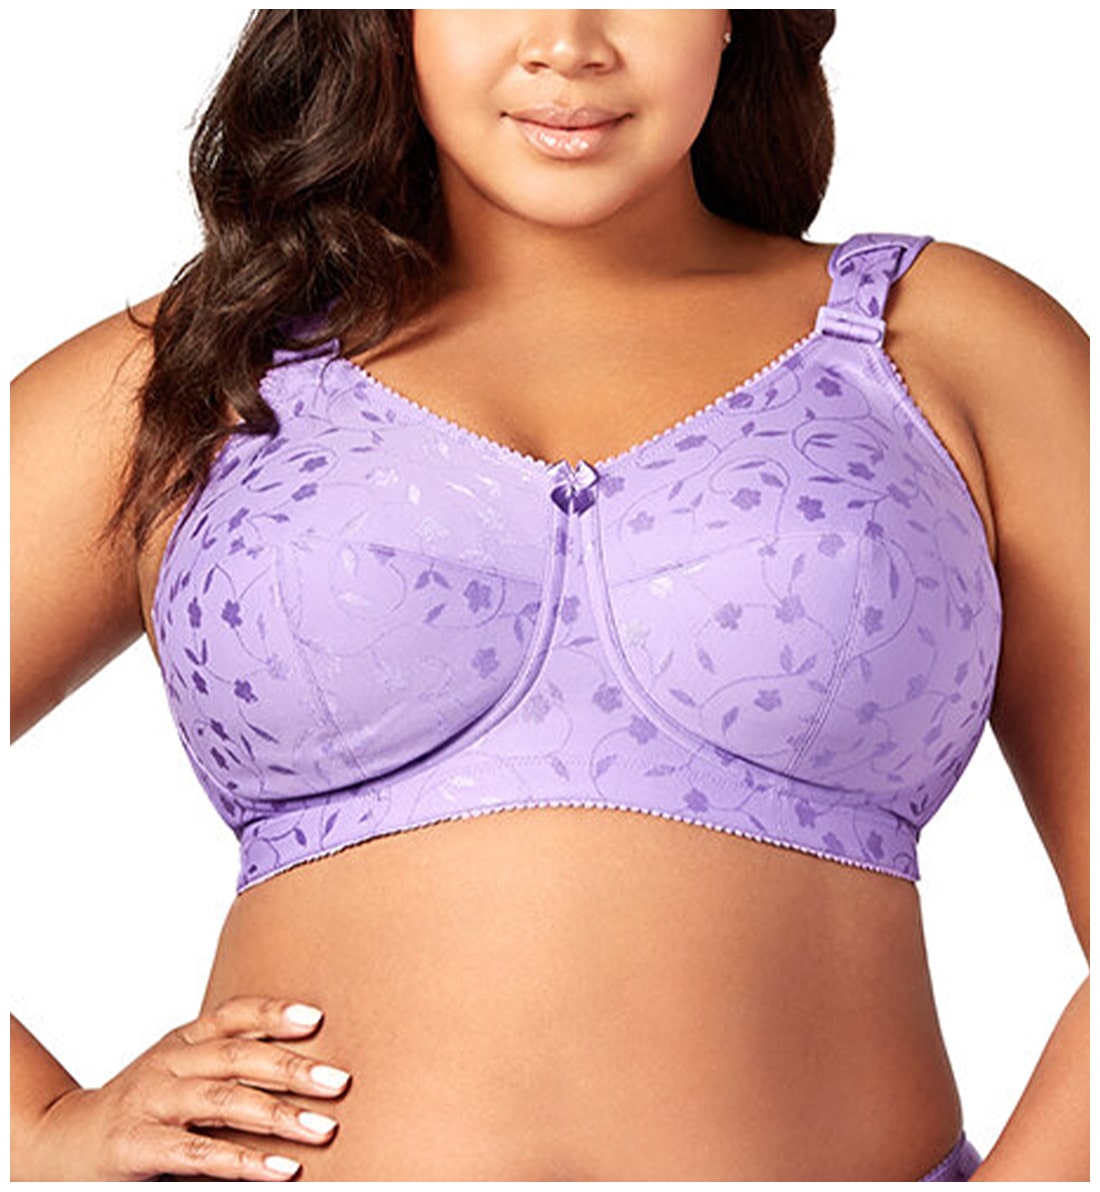 Wholesale bra size 38f For Supportive Underwear 